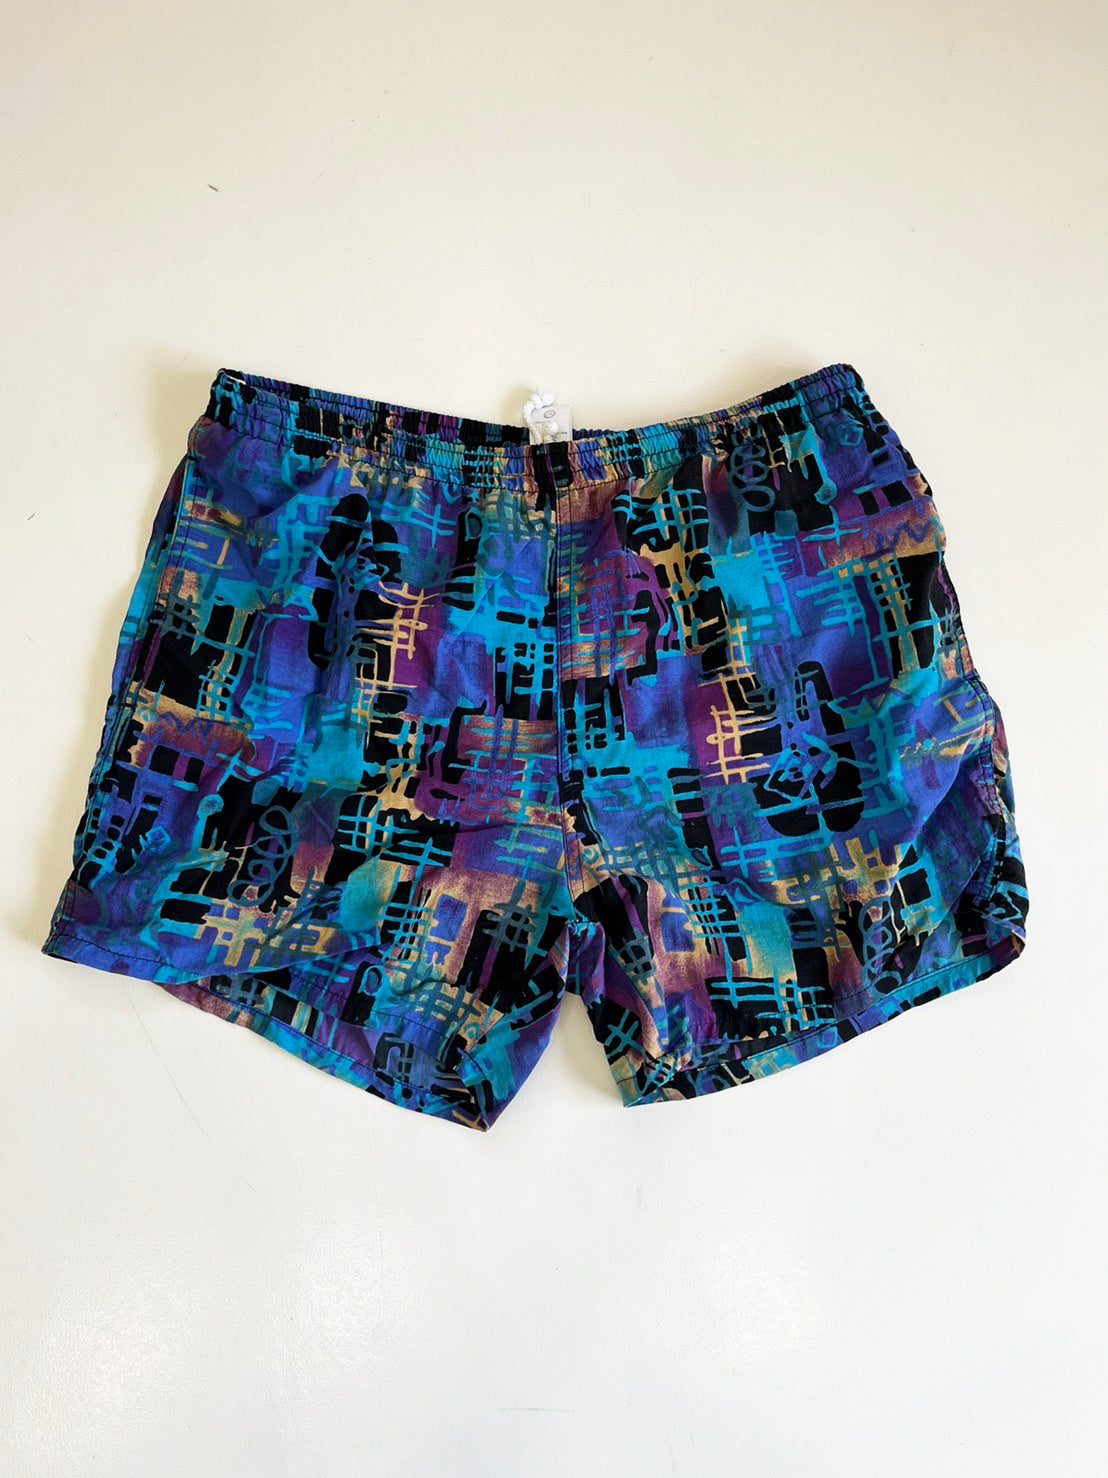 【EURO vintage 】RODEO vintage beach shorts  ロデオ メンズ 水着 サーフパンツ ボードショーツ (men's M サイズ）